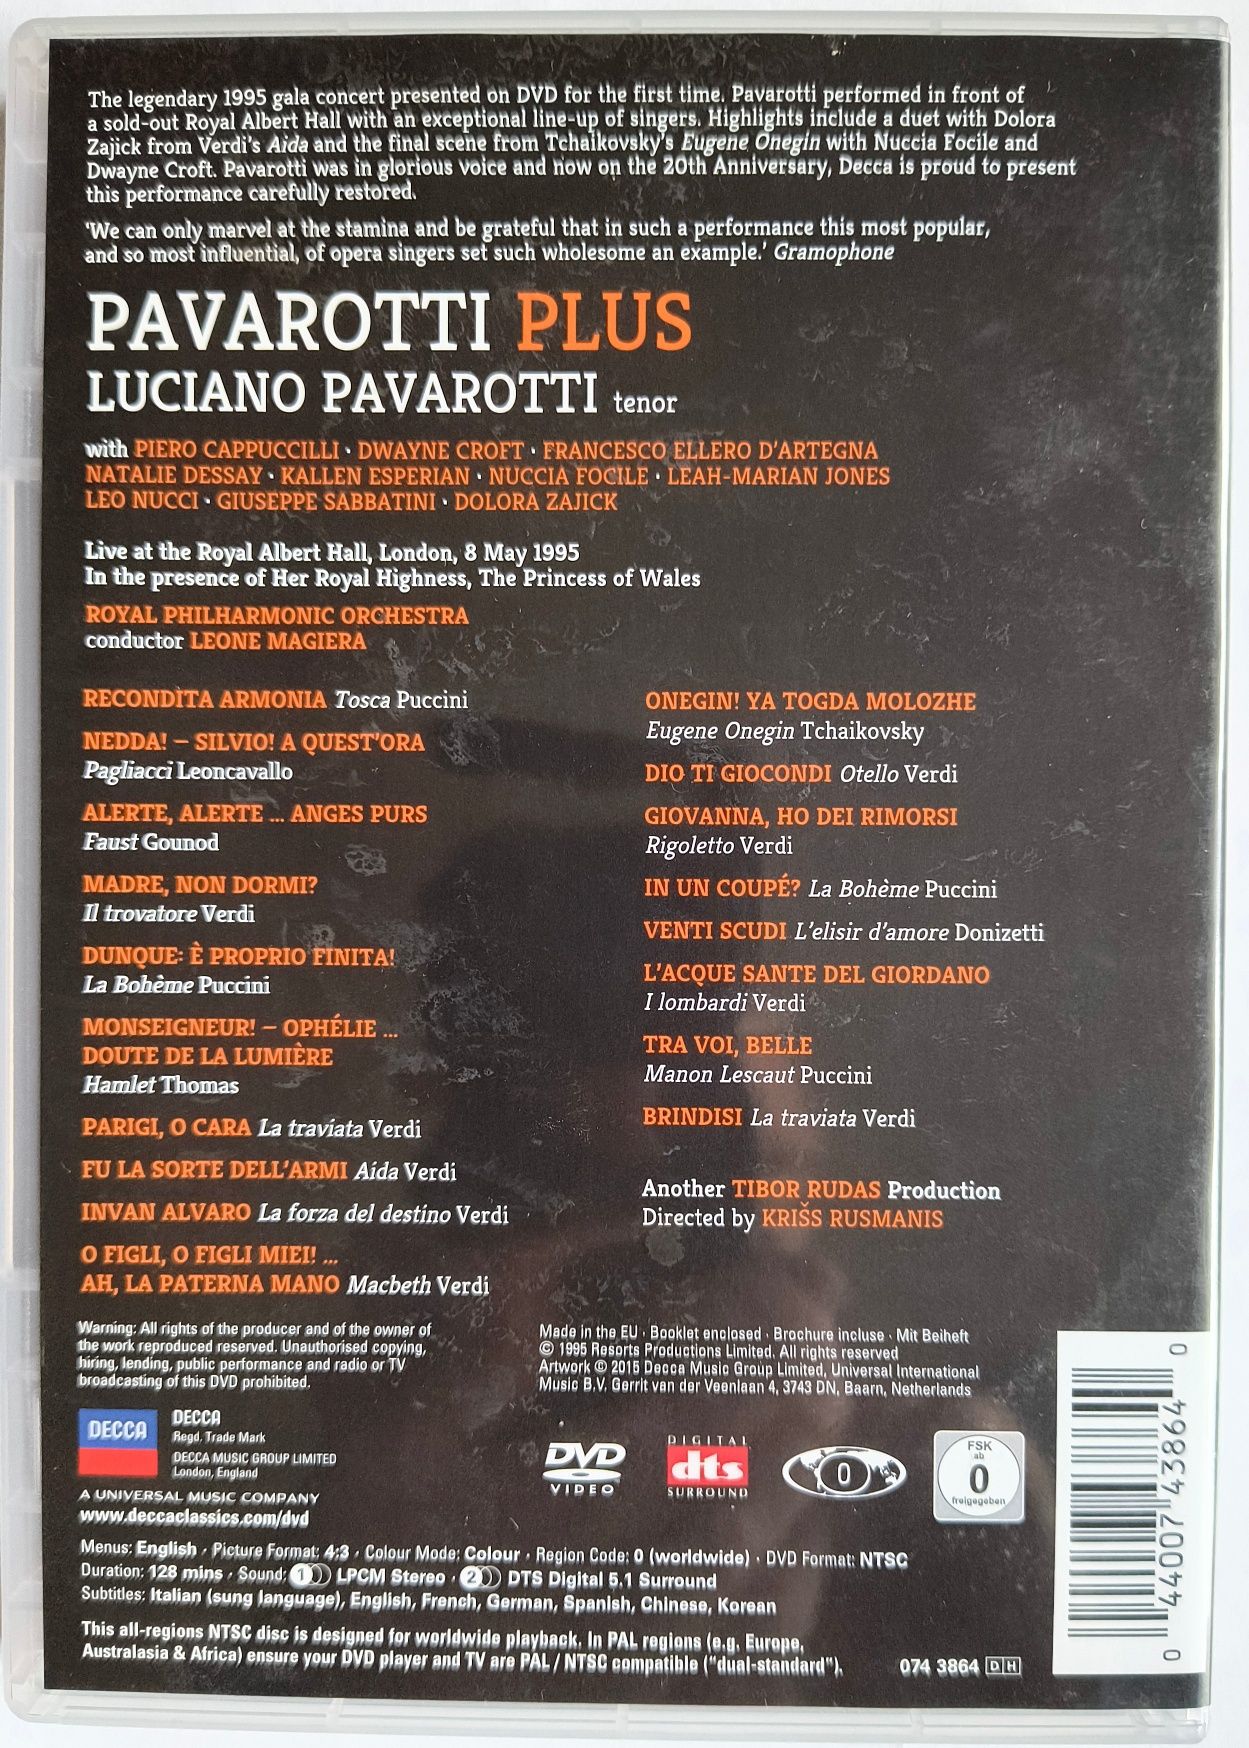 Pavarotti Plus /At the Royal Albert Hall